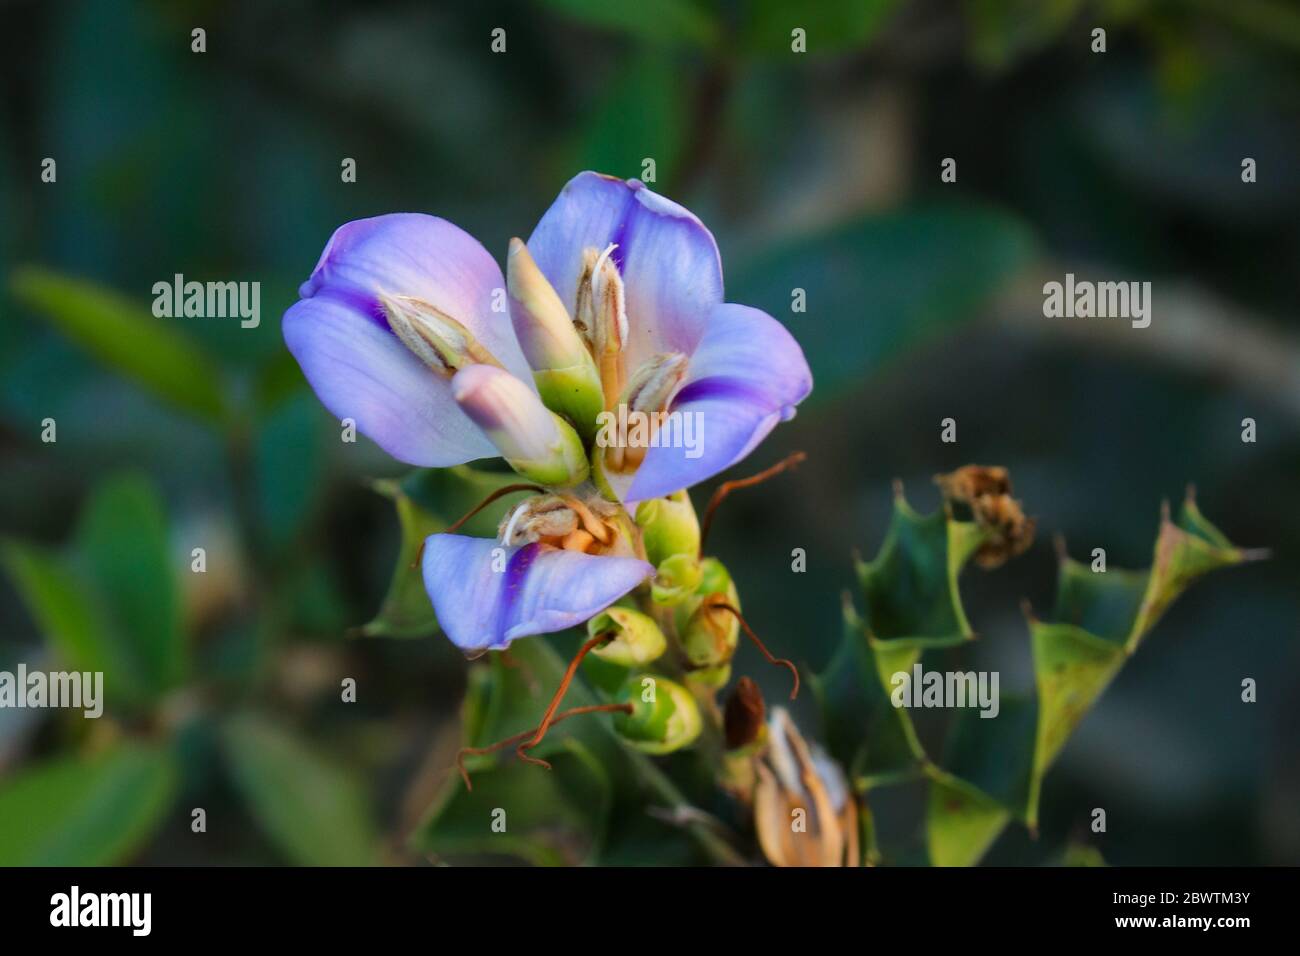 Landscape Acanthus Ilicifolius flower. Selective focus. Shallow depth of field. Background blur. Stock Photo